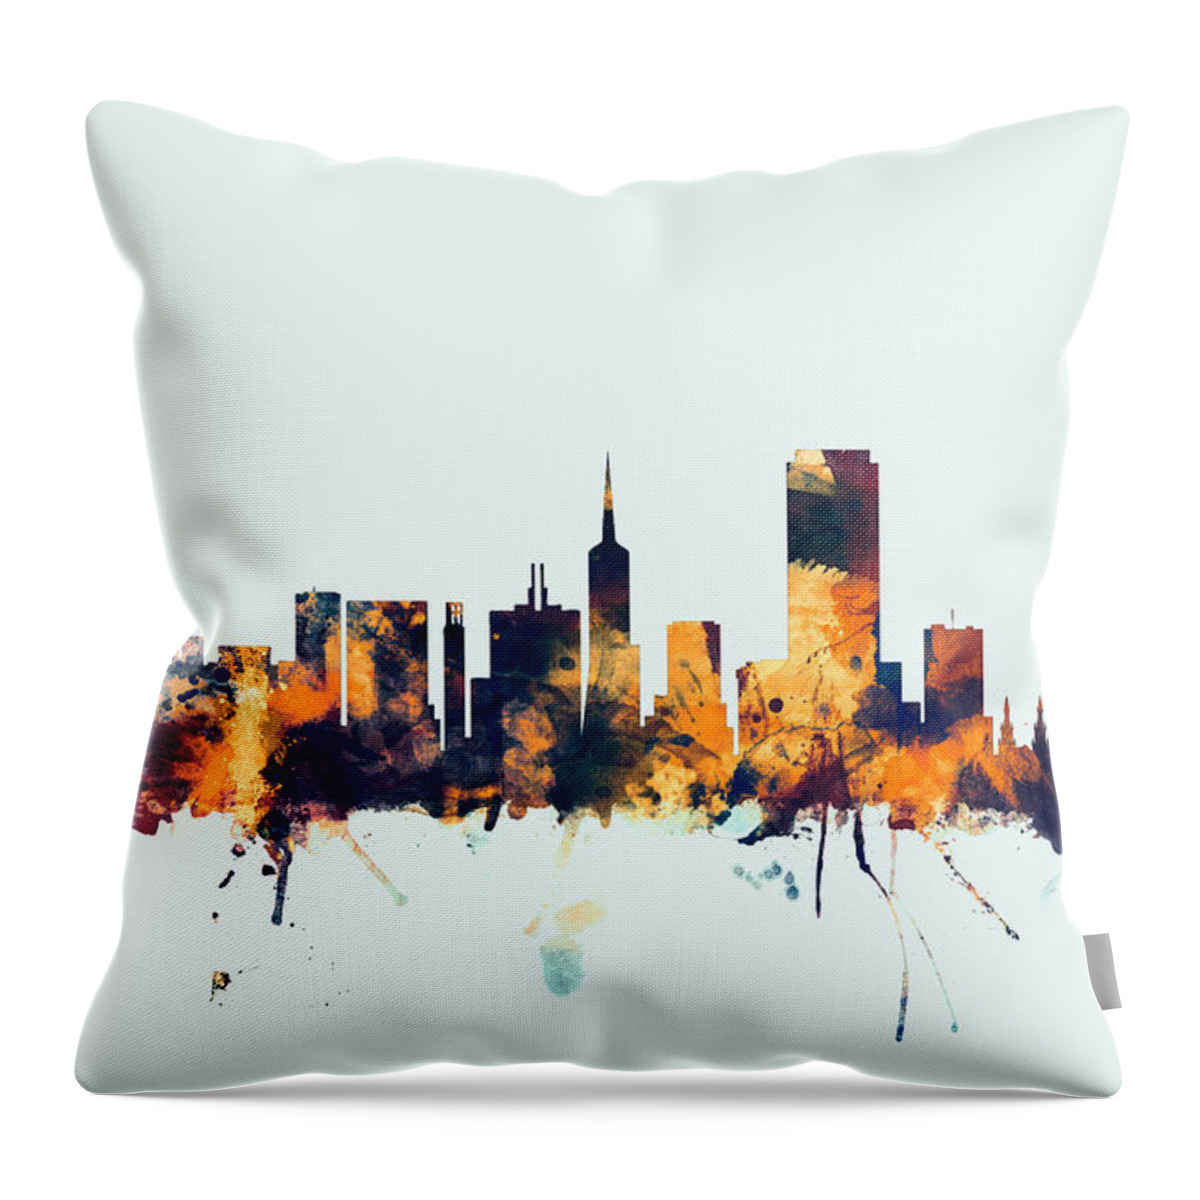 San Francisco Throw Pillow featuring the digital art San Francisco City Skyline #9 by Michael Tompsett